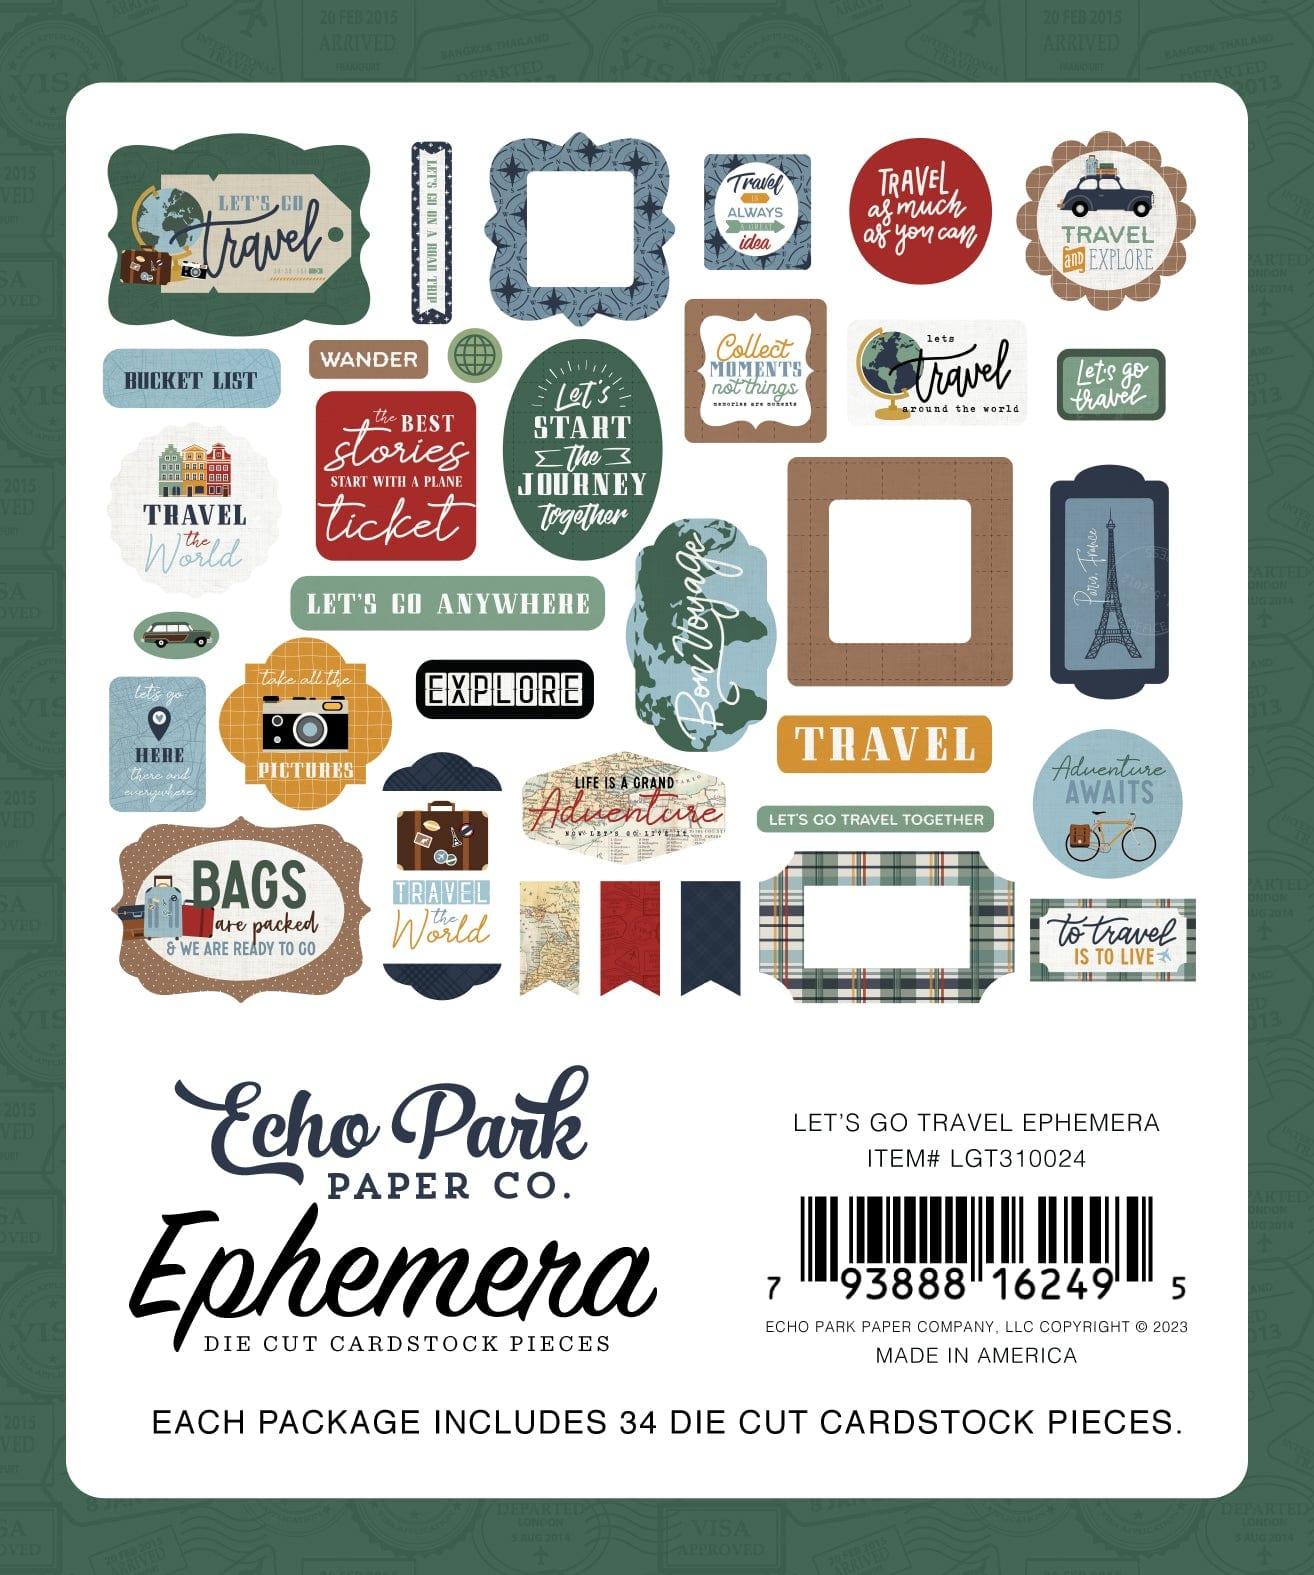 Let's Go Travel Collection 5 x 5 Scrapbook Ephemera Die Cuts by Echo Park Paper - Scrapbook Supply Companies